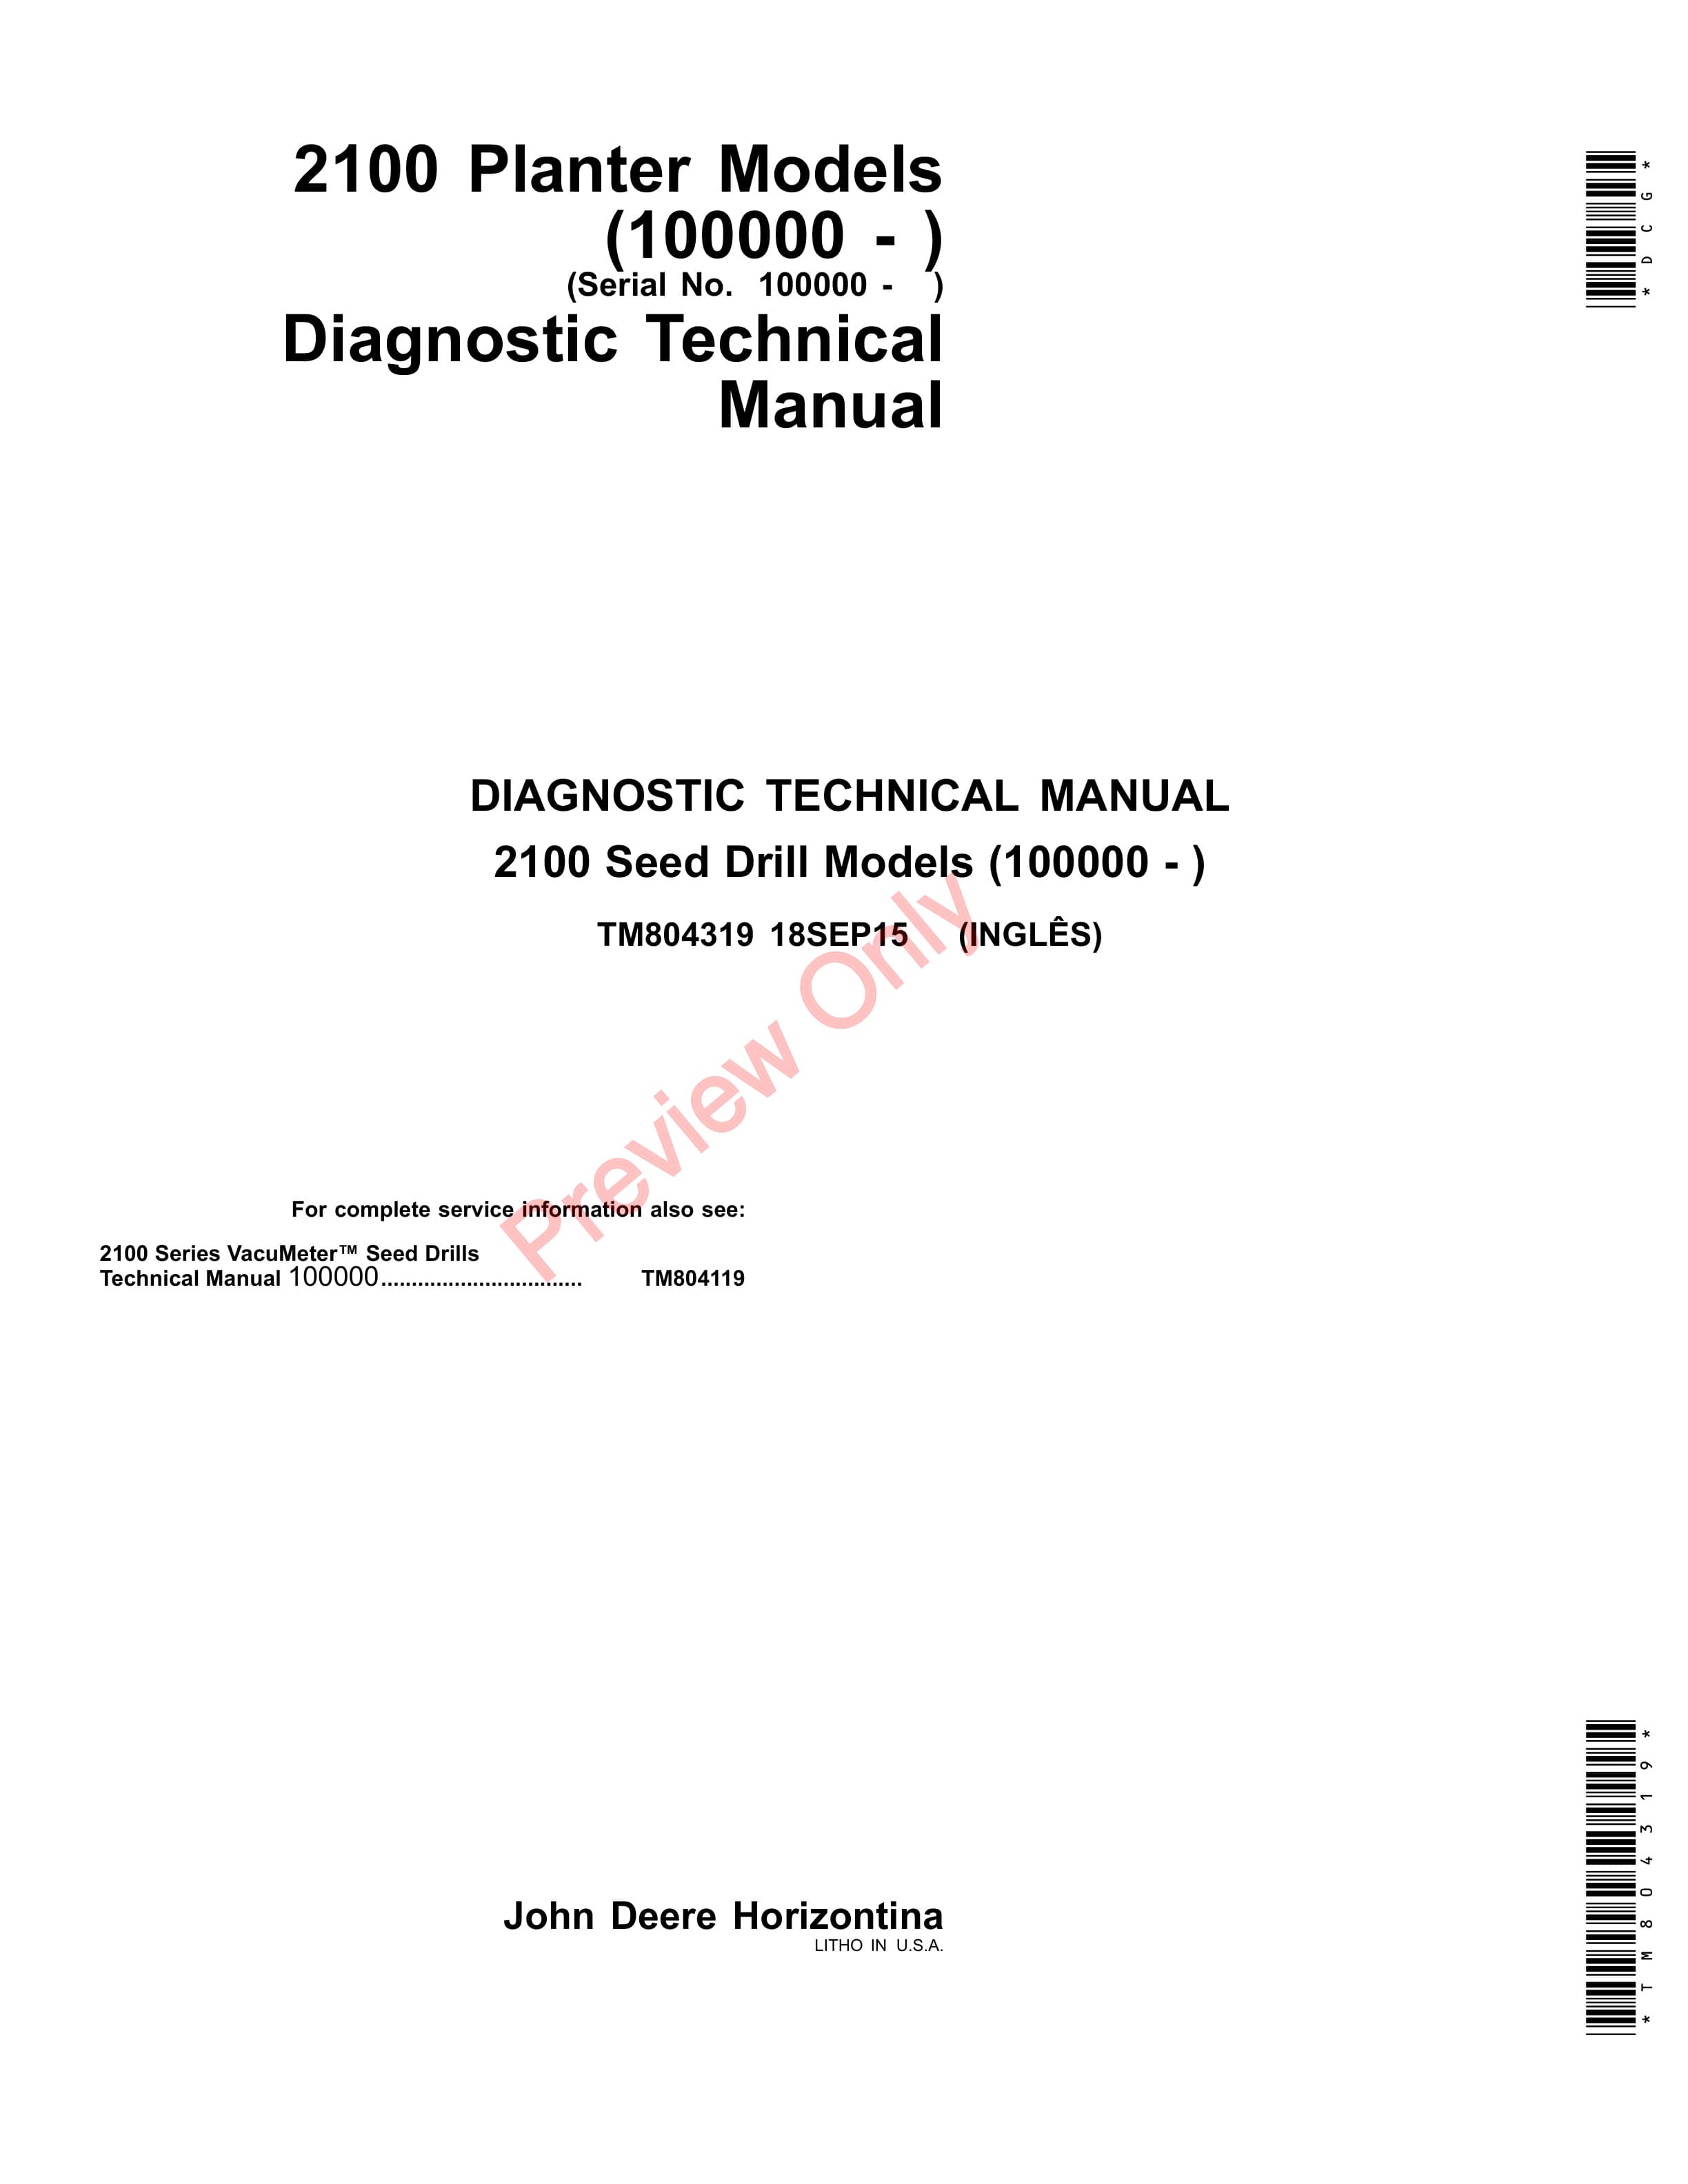 John Deere 2113 2115 2117 2122 2126 2130 and 2134 Planters Diagnostic Technical Manual TM804319 15AUG17 1